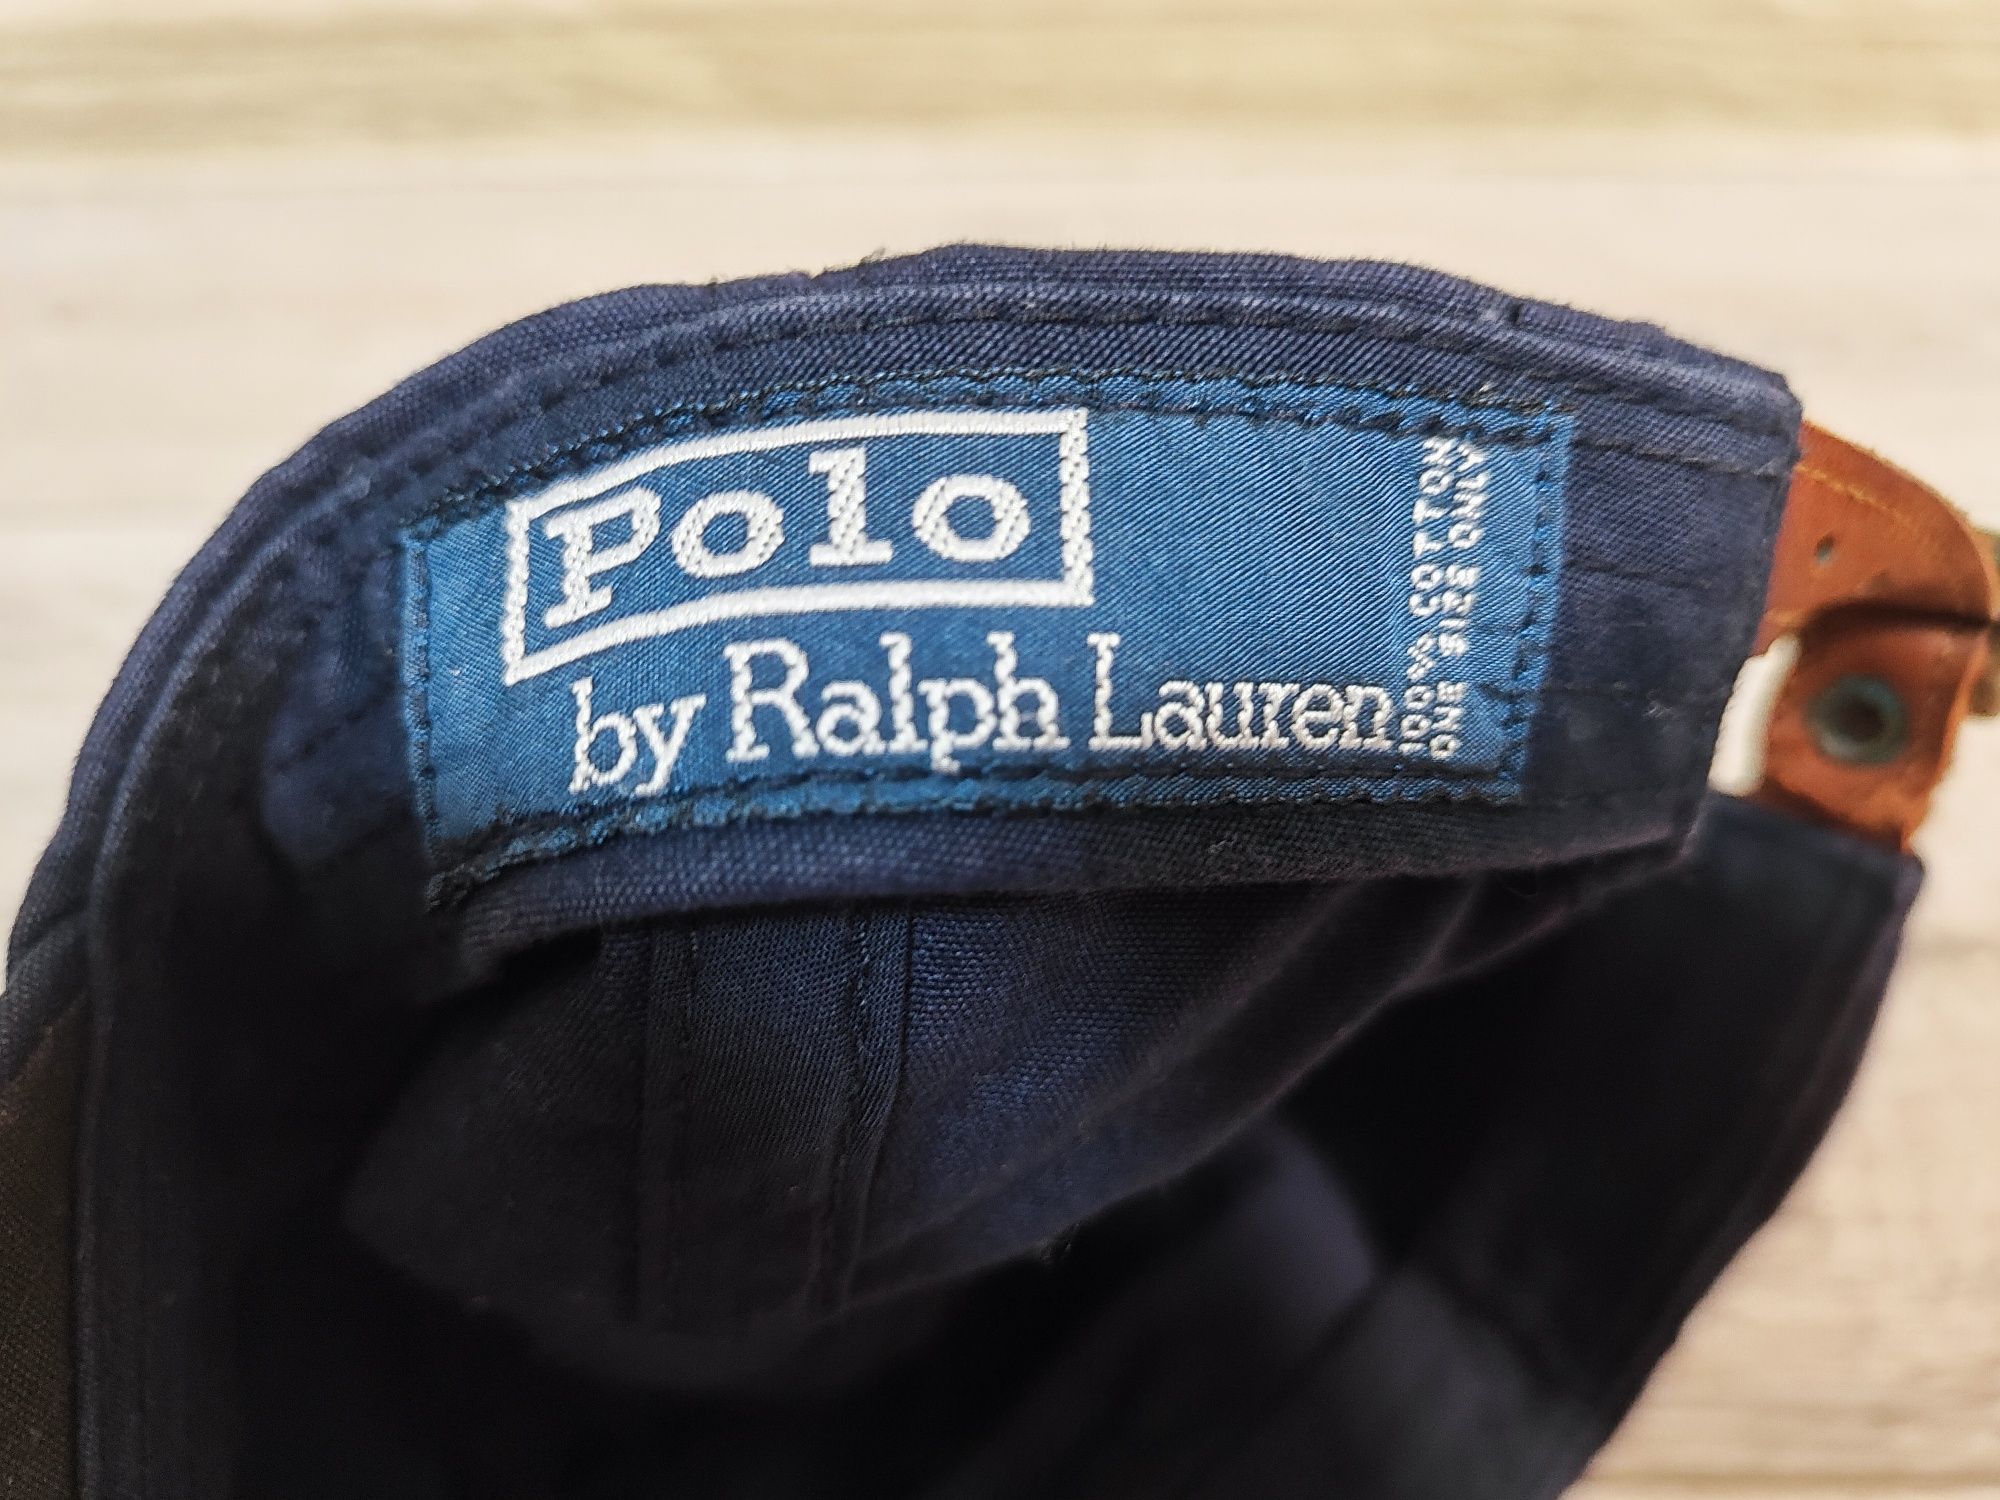 Бейсболка Polo Ralph Lauren